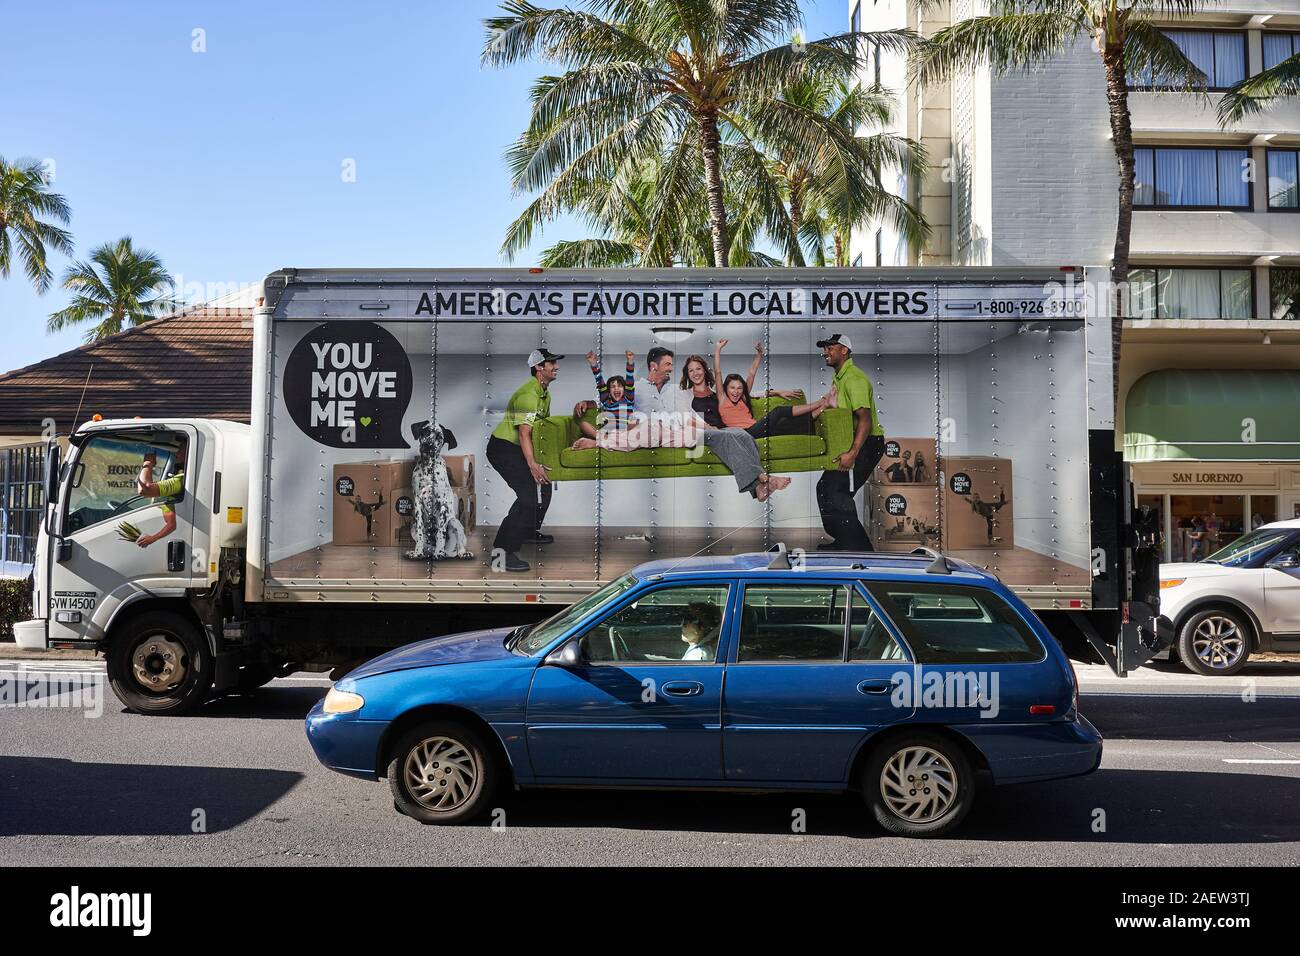 American moving company You Move Me's truck is seen on the street in the Waikiki neighborhood in Honolulu, Hawaii, on Nov 25, 2019. Stock Photo